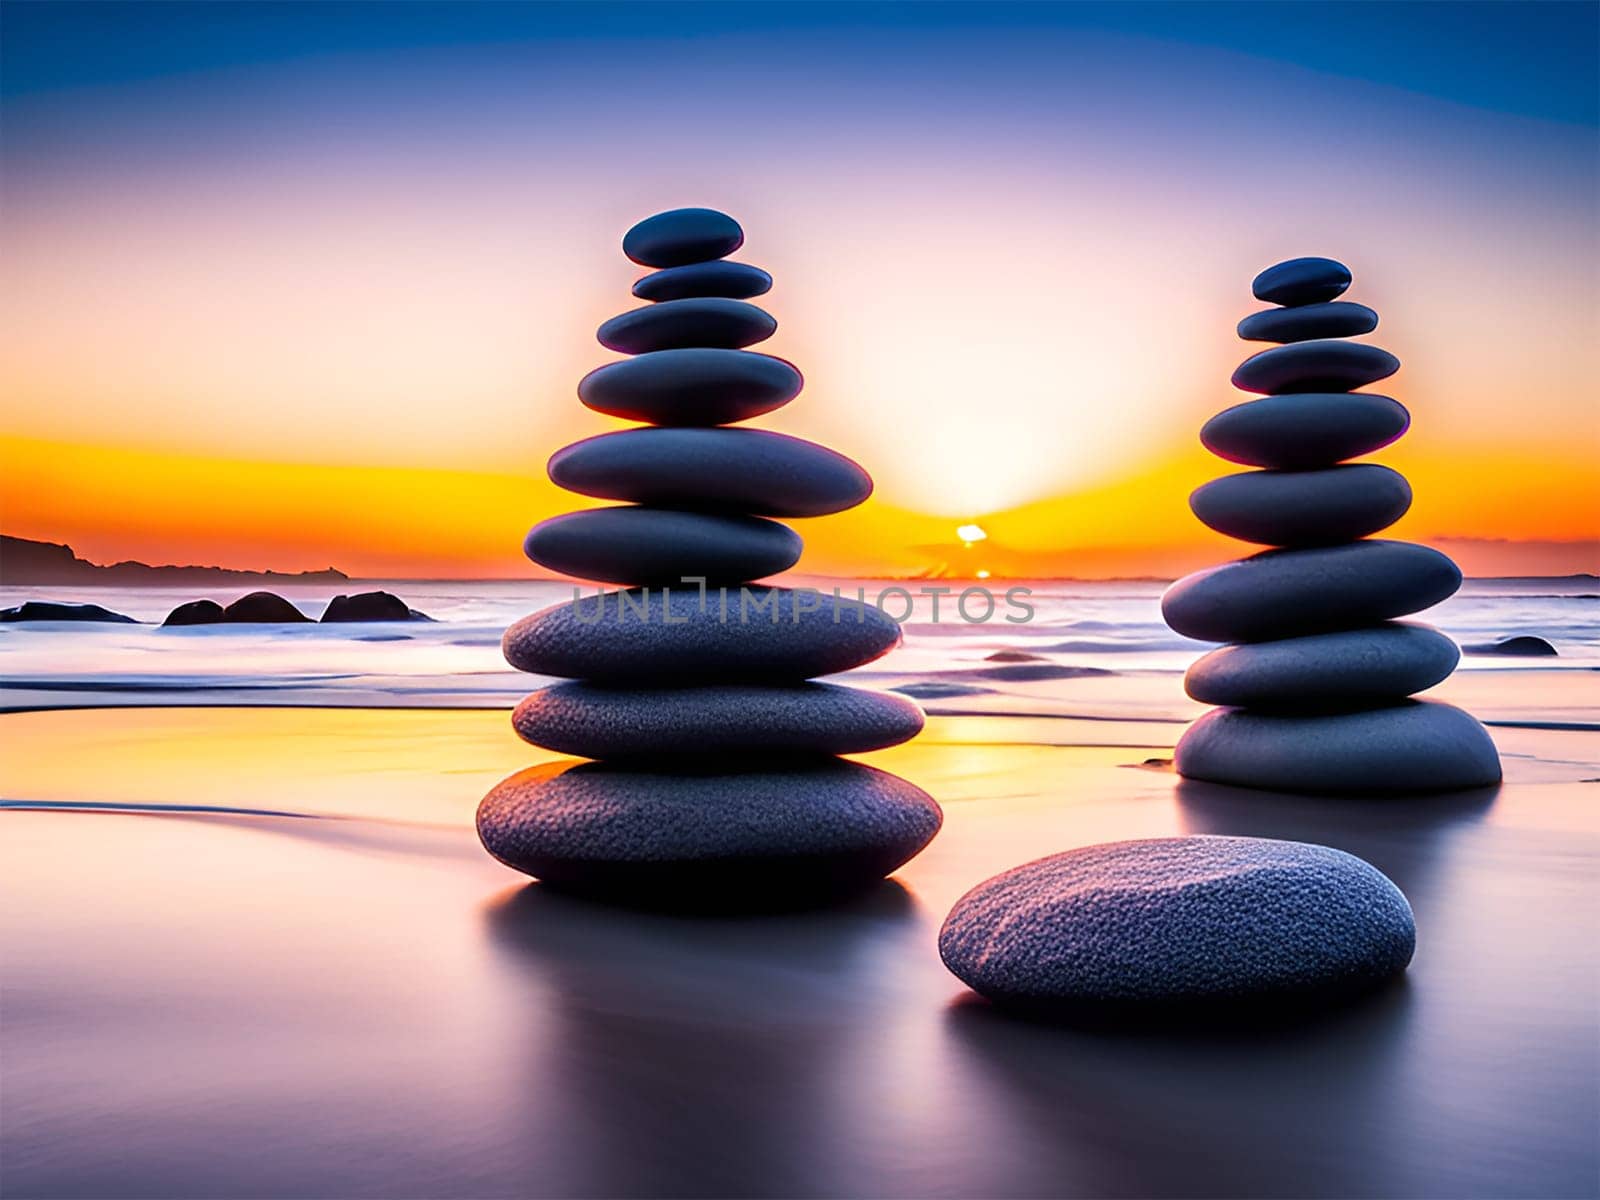 Zen stone in balance in peaceful sunset landscape - AI generated